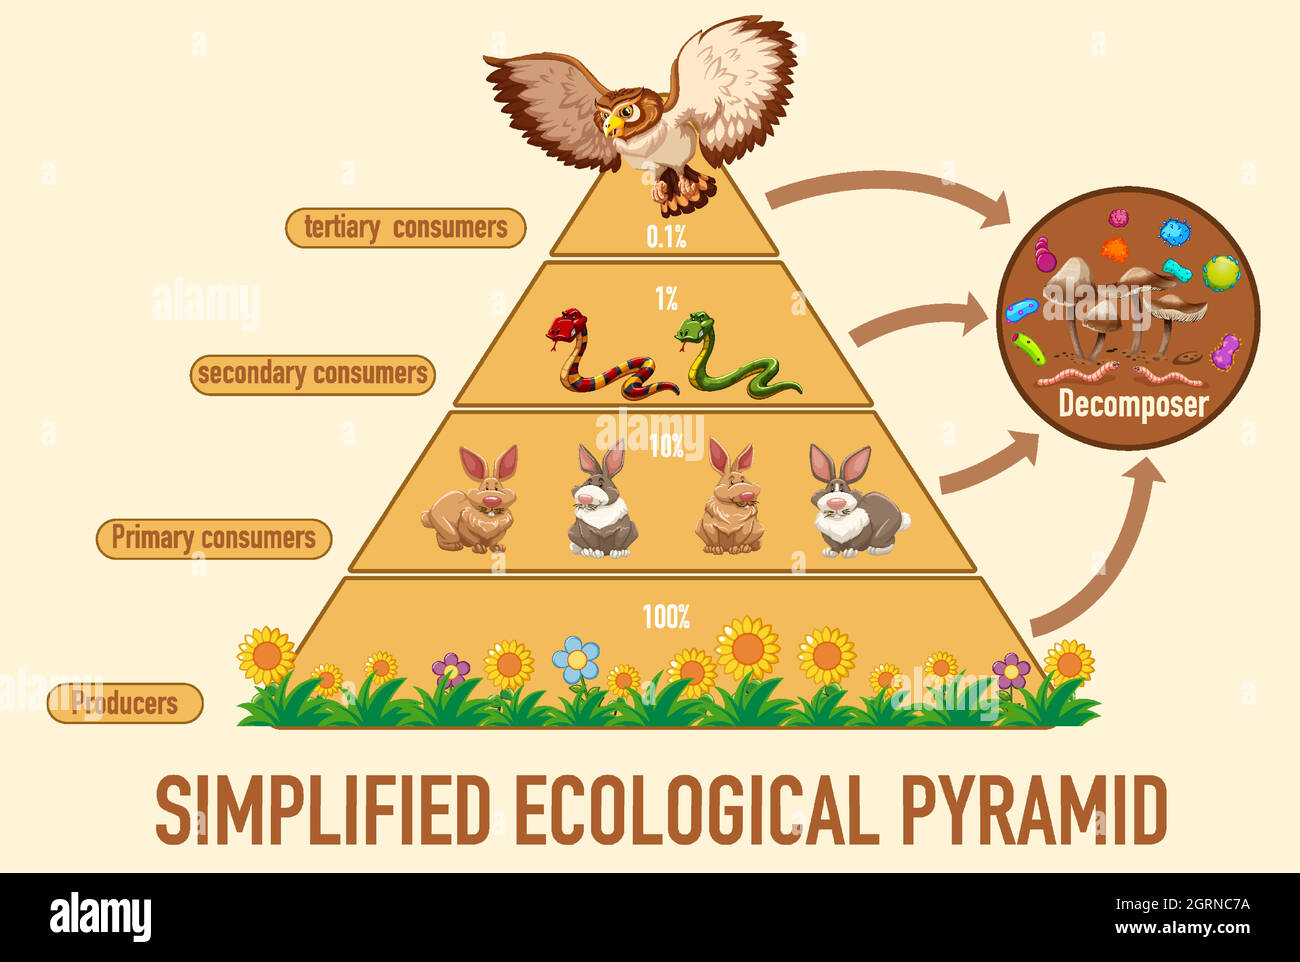 desert ecological pyramid